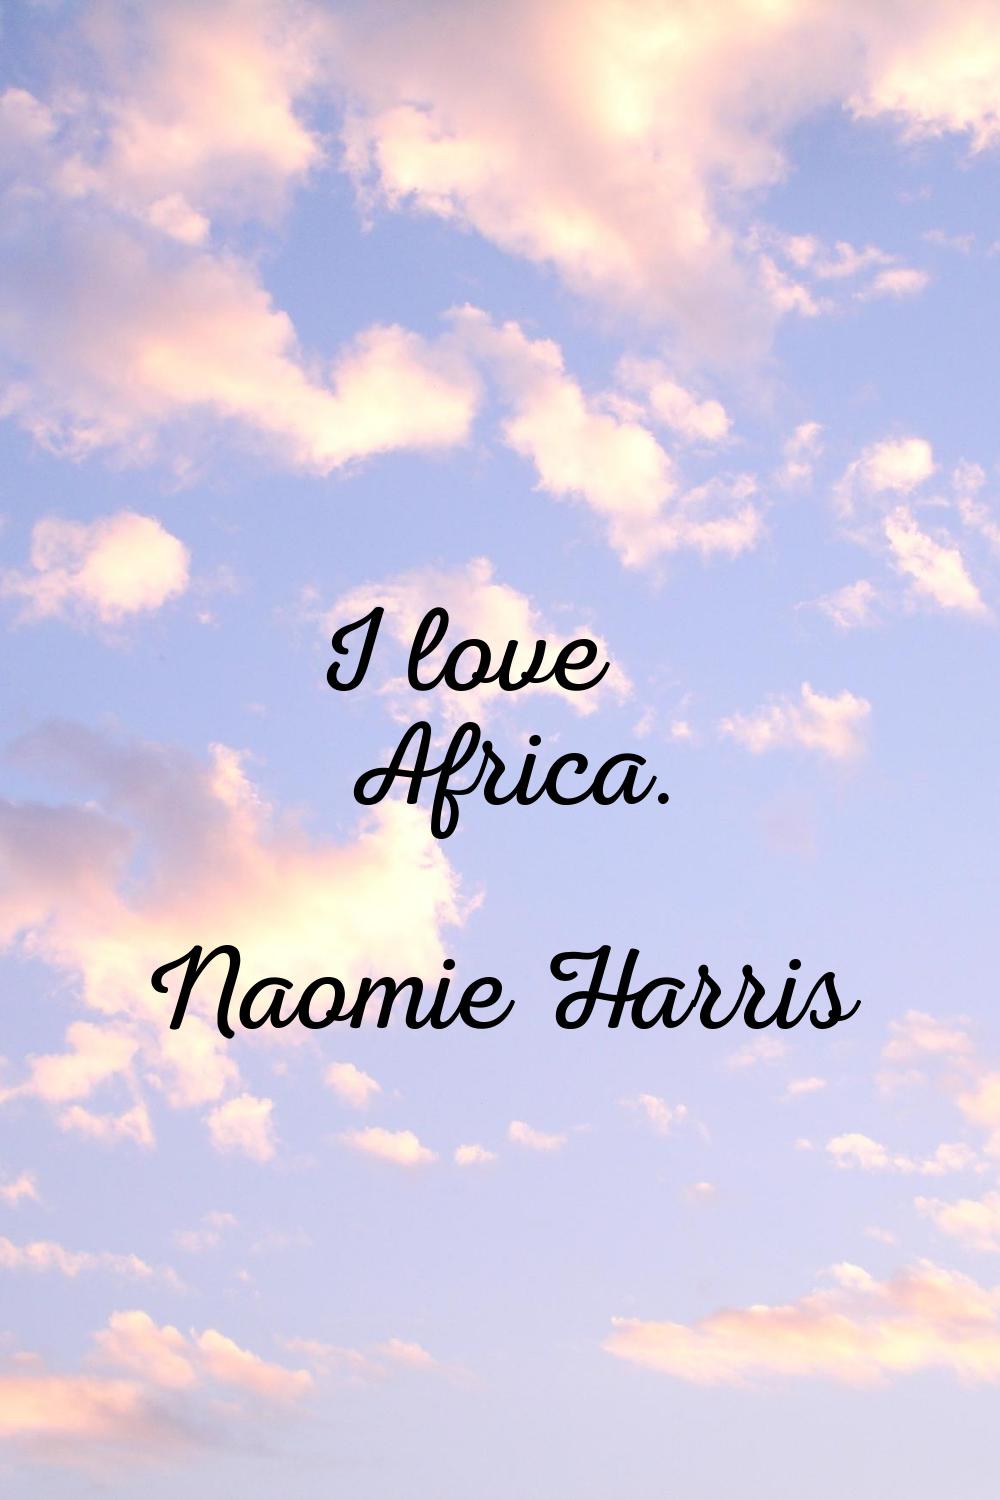 I love Africa.